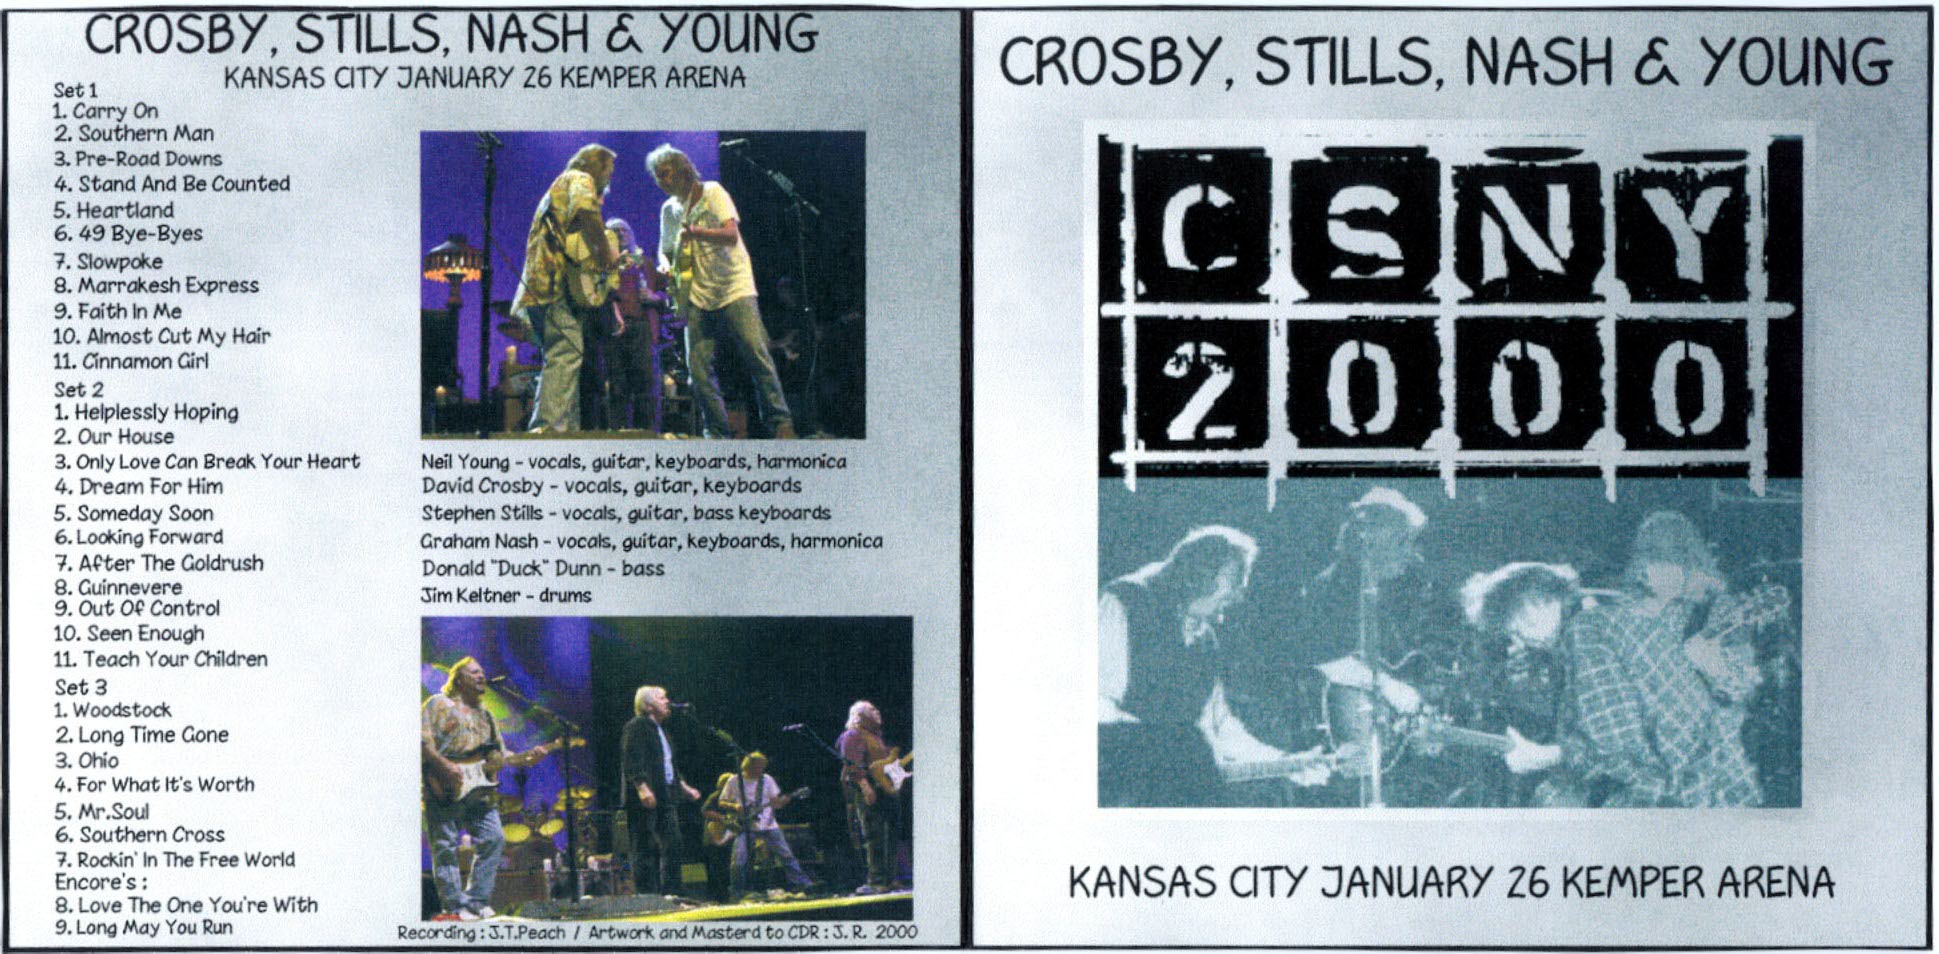 csny tour 2000